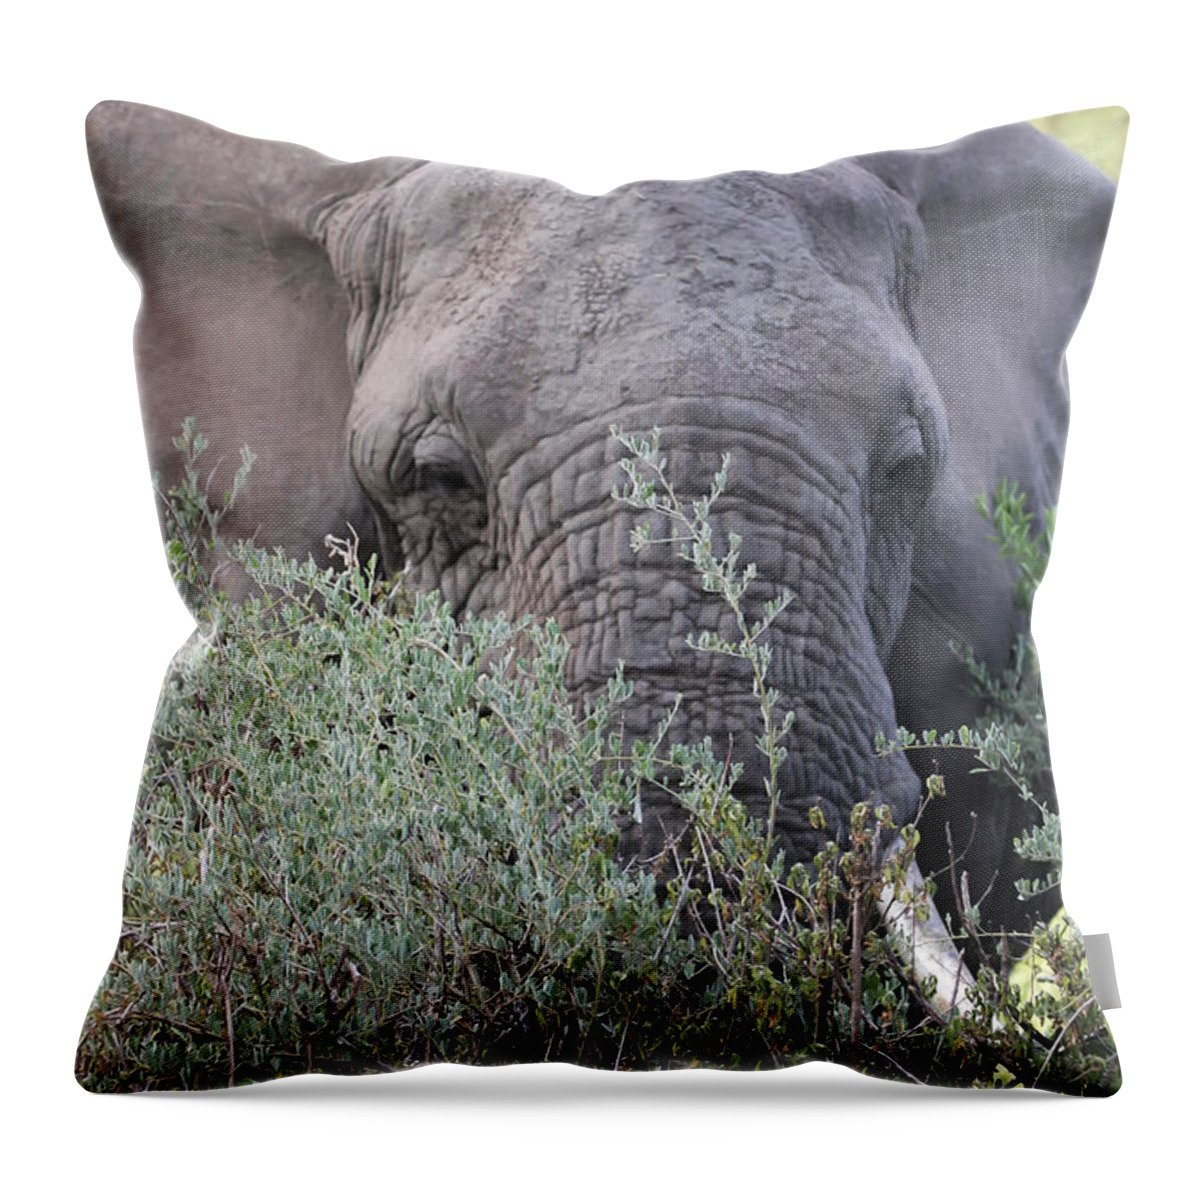 Gary Hall Throw Pillow featuring the photograph Lake Manyara Elephant by Gary Hall